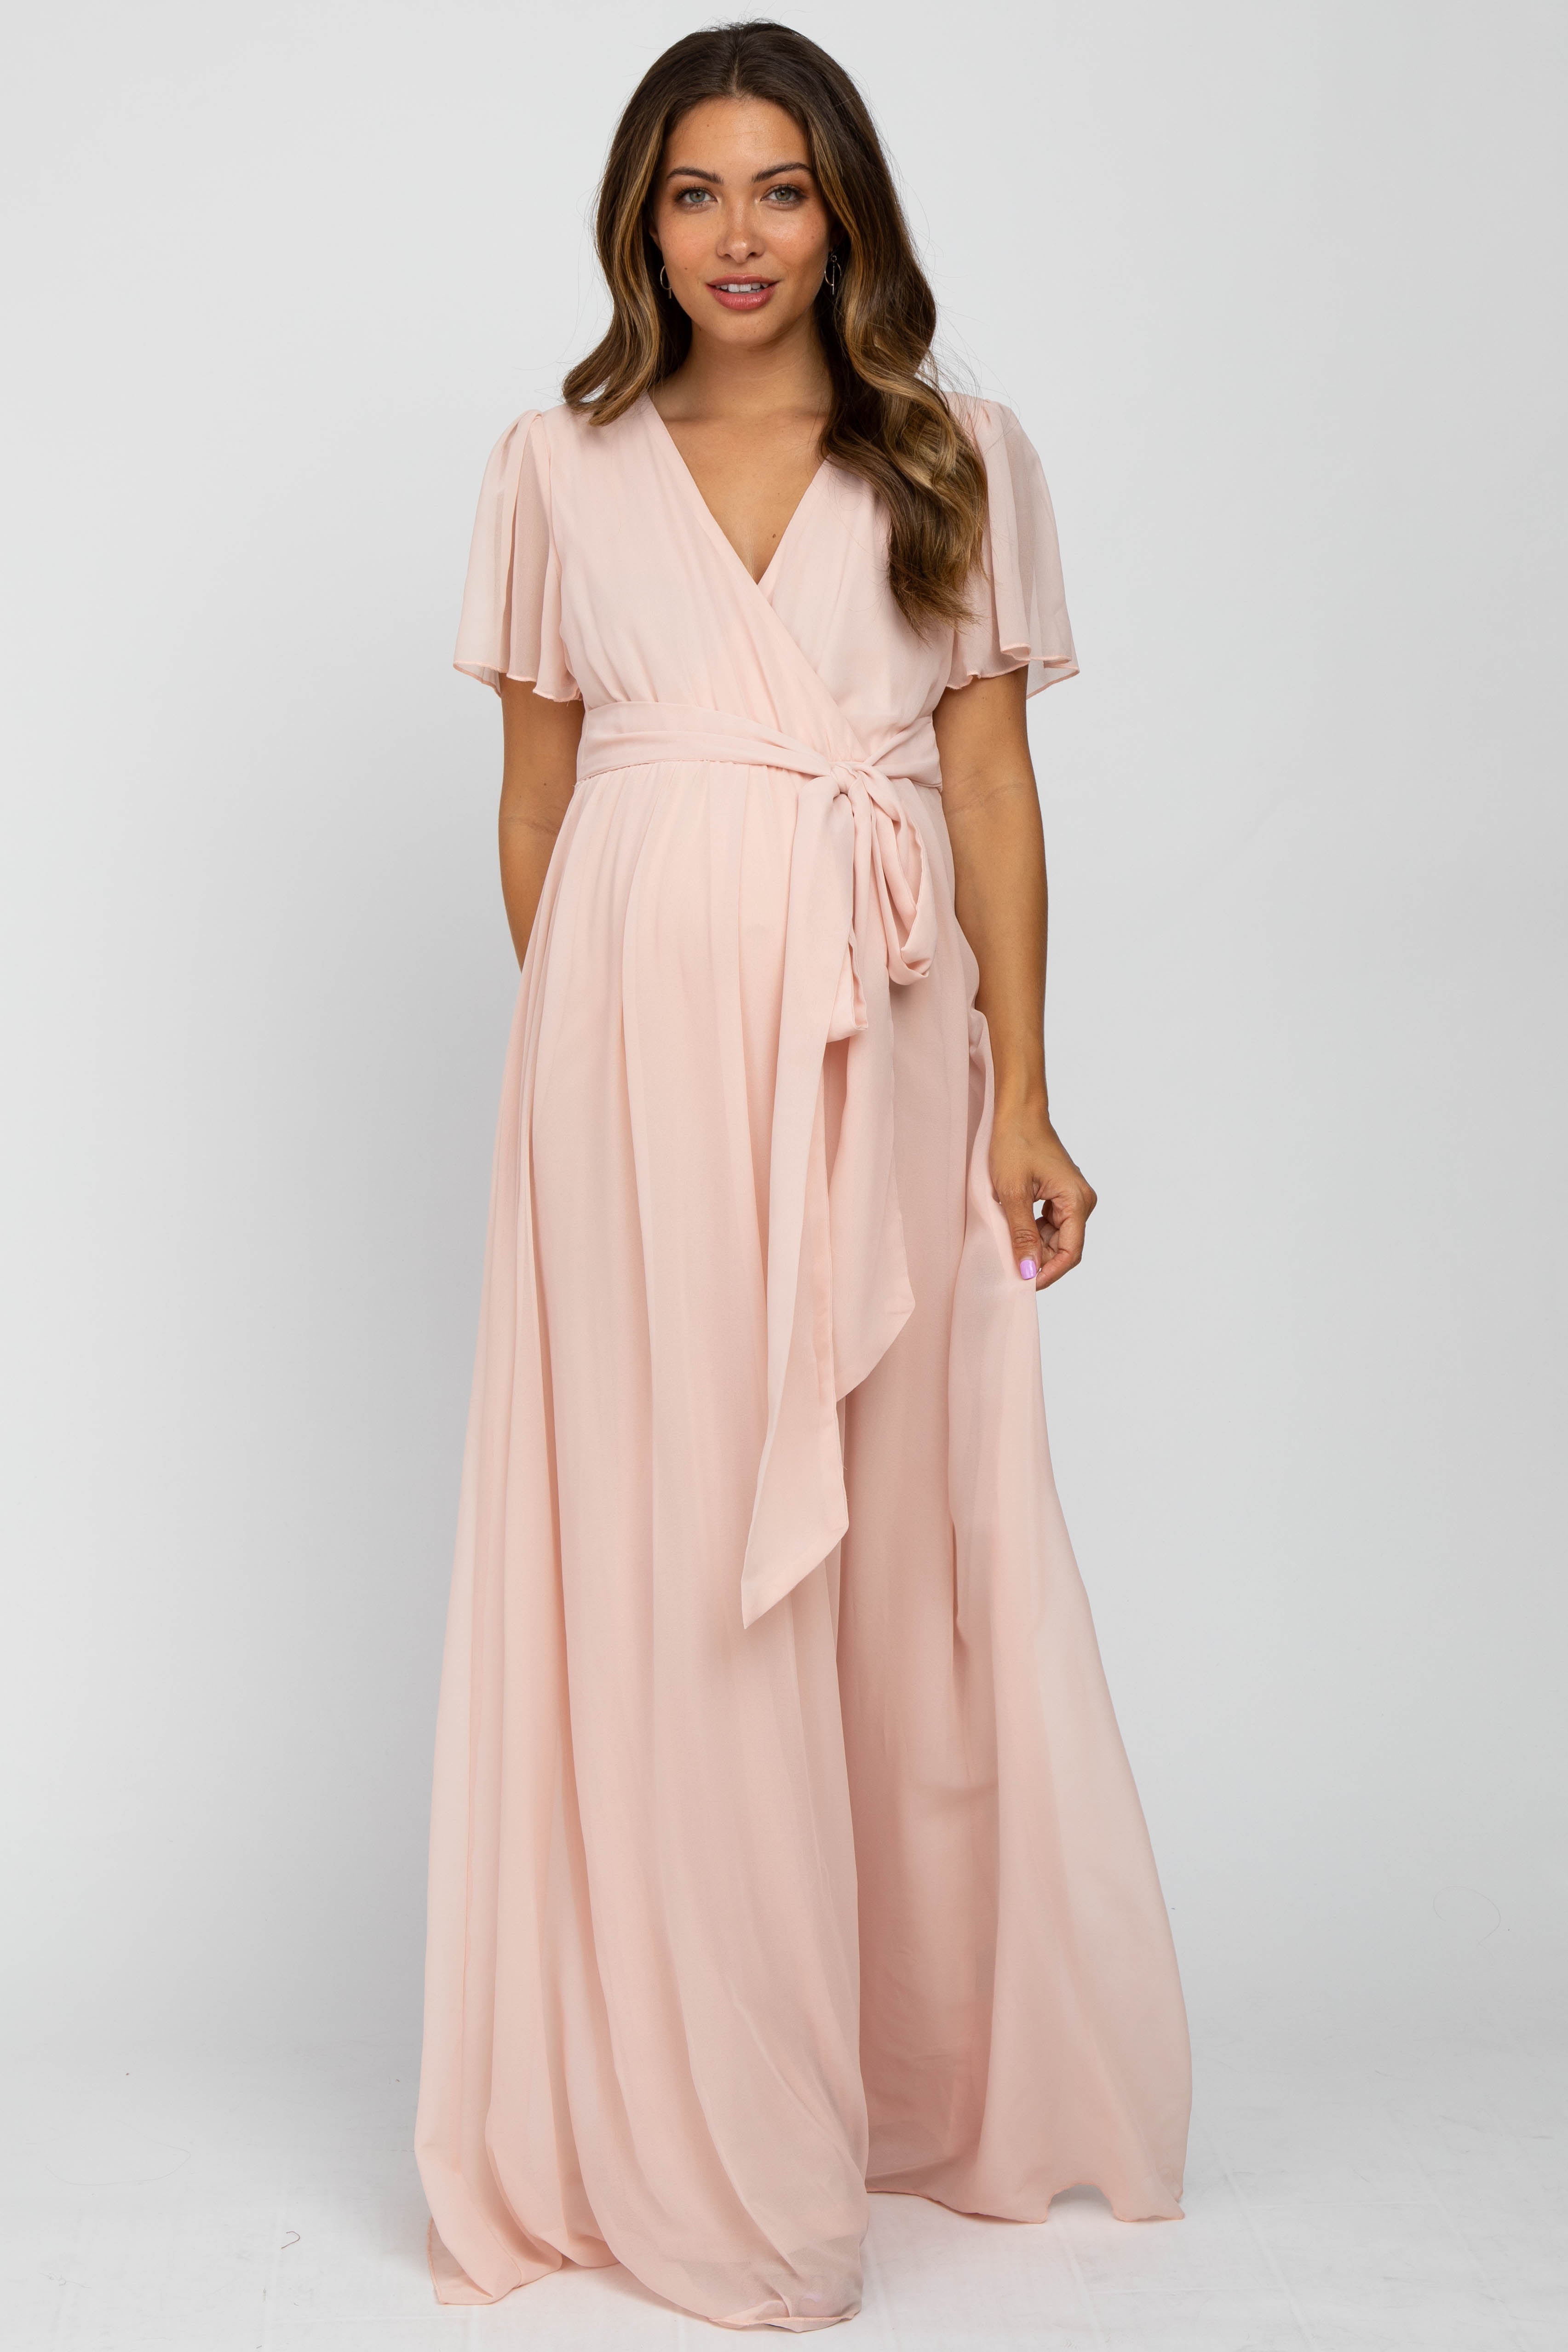 short light pink bridesmaid dress